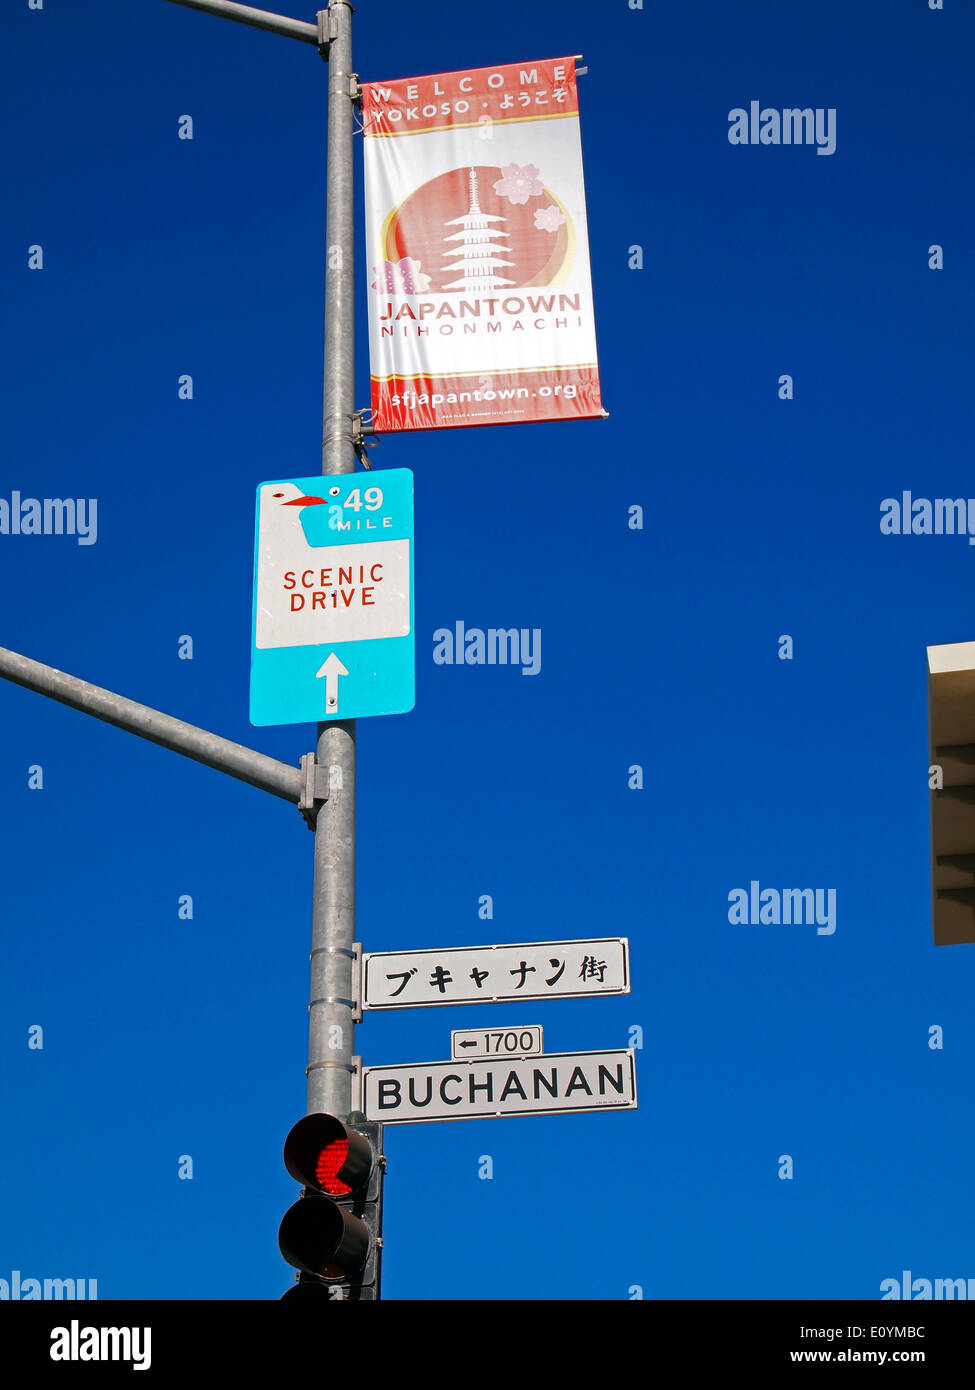 49-Mile Scenic drive, Buchanan Street signs, Japantown Banner, San Francisco Stockfoto